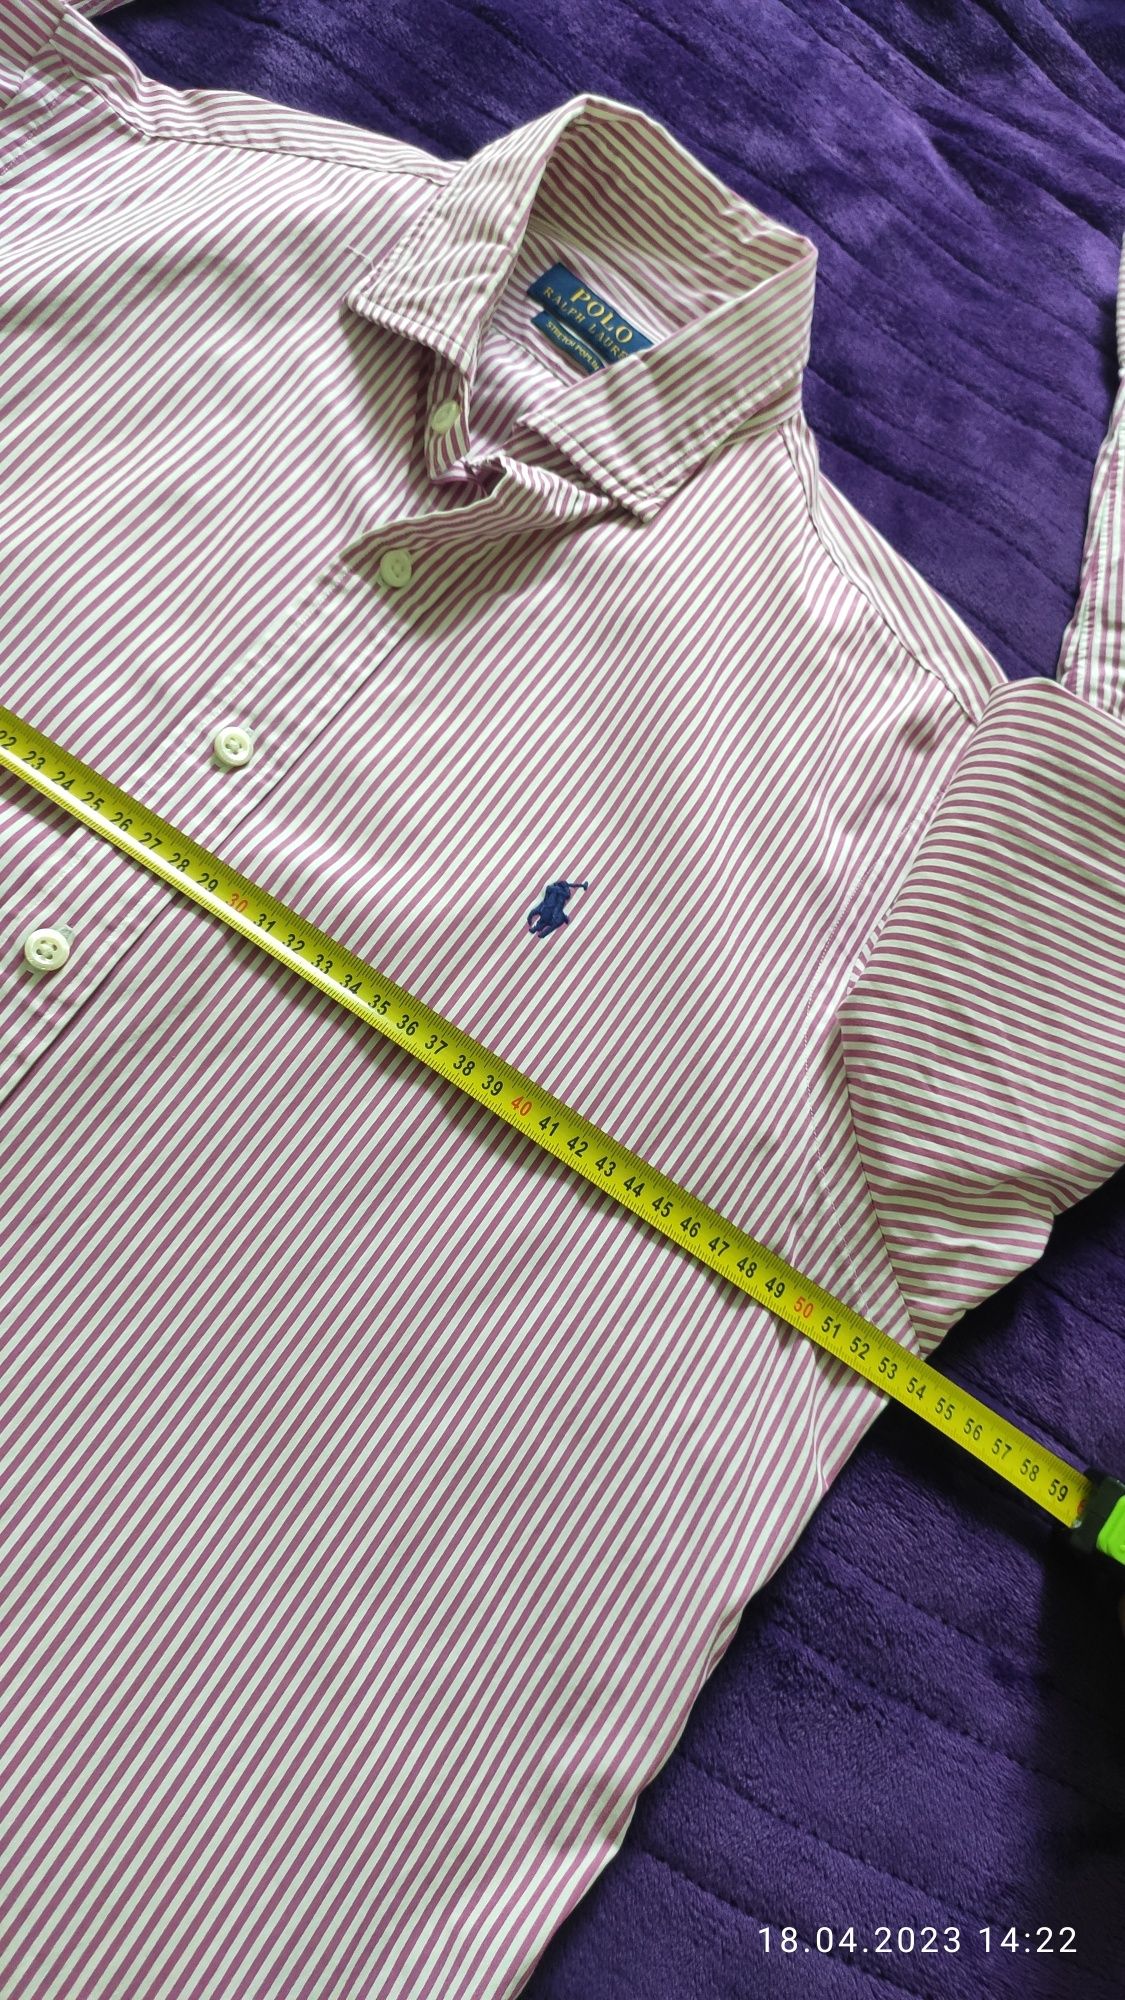 Koszula męska Ralph Lauren Polo original rozmiar M/L nowa bez metki.